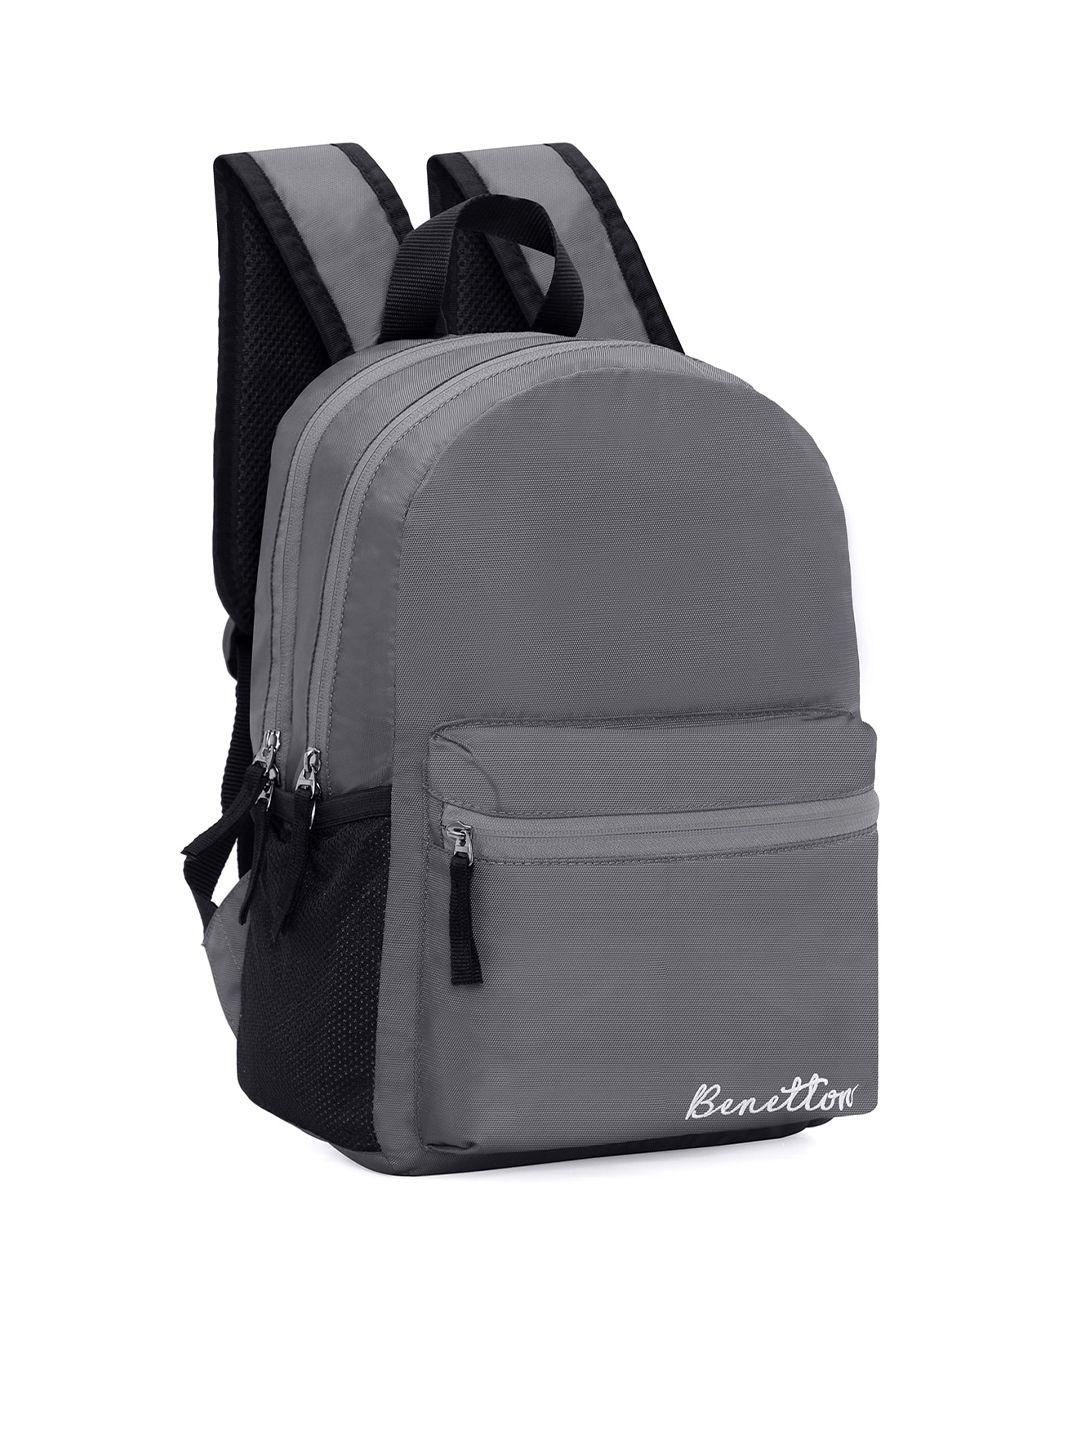 united colors of benetton unisex grey & black backpack